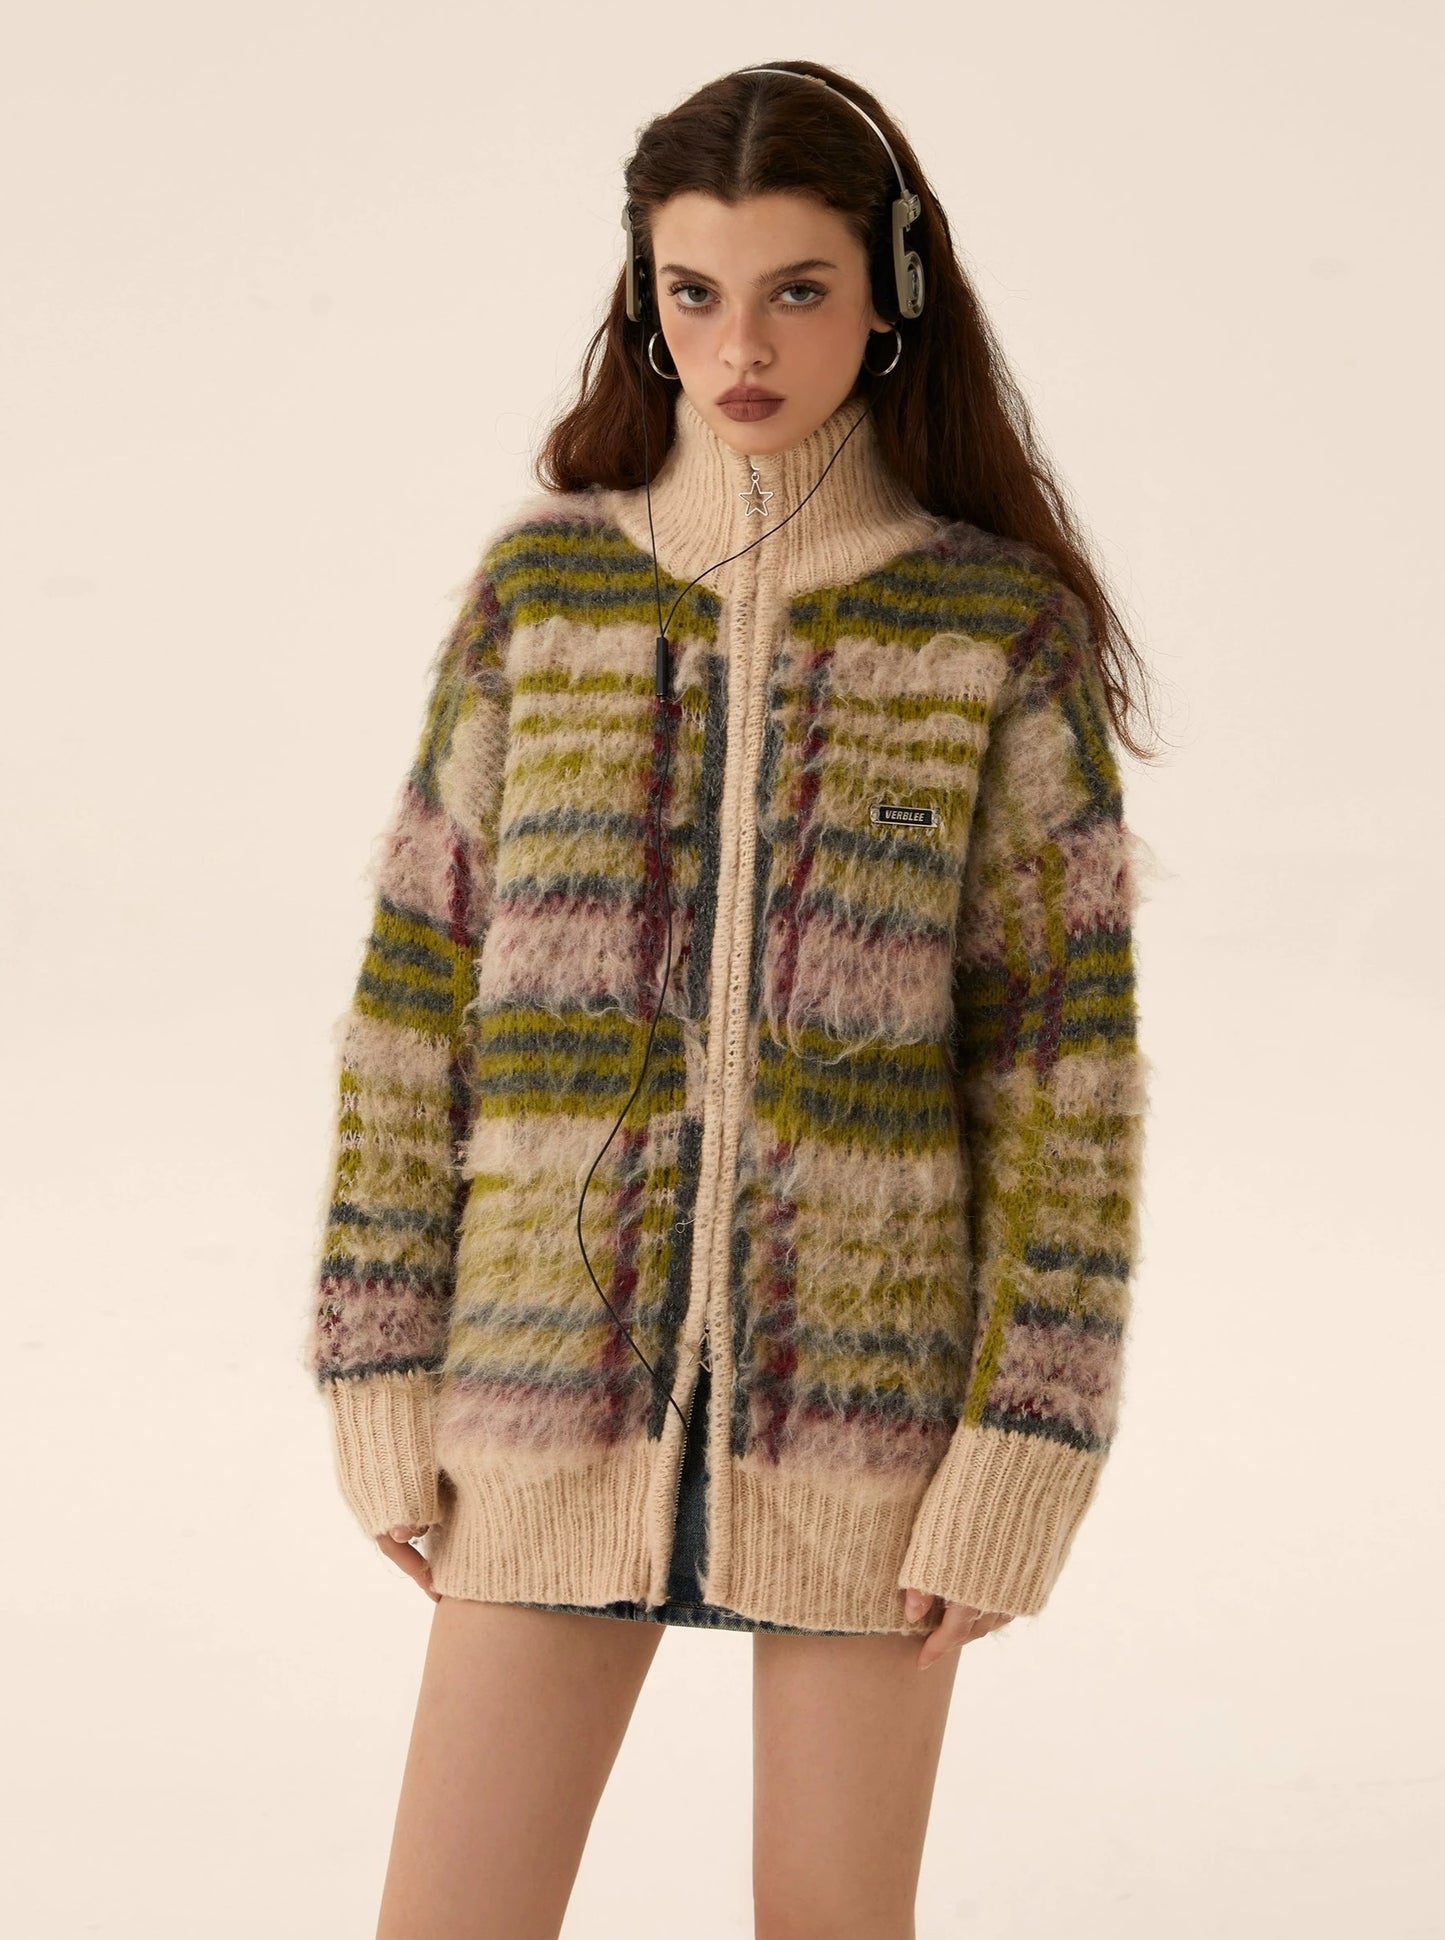 Cropped mohair knit cardigan zipper sweater coat